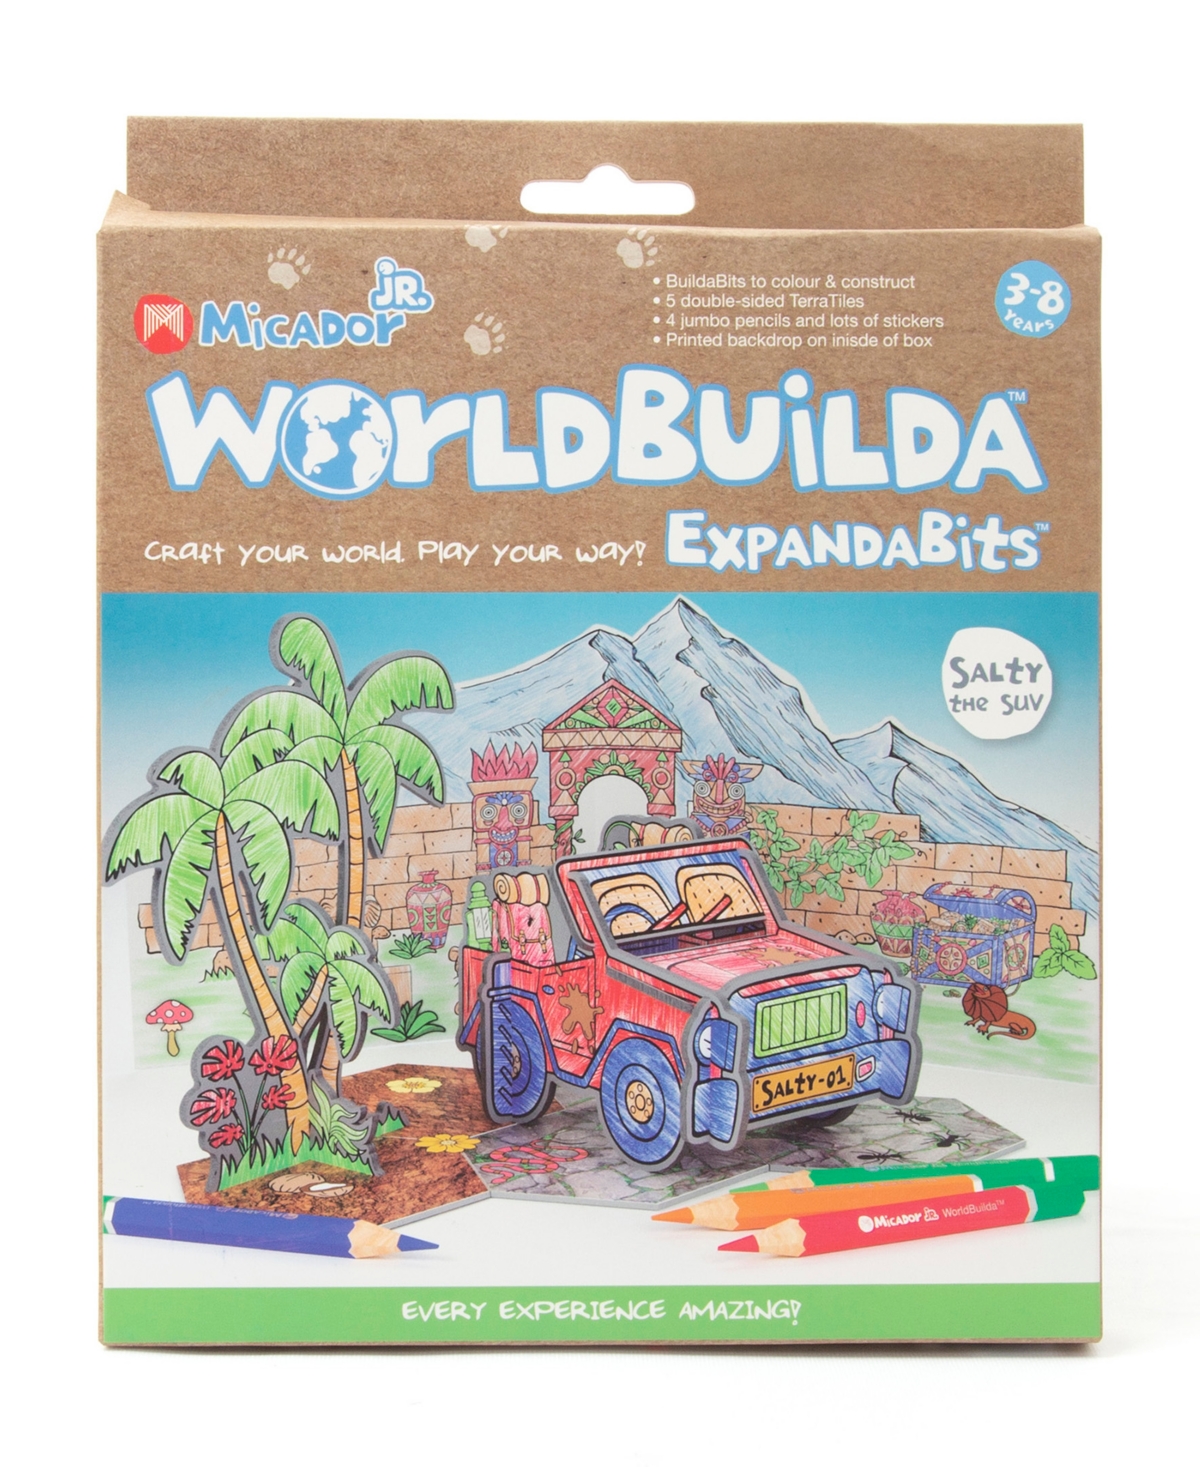 Micador Jr. Babies' Worldbuilda Expandabits Color & Build Kit, Salty The Suv